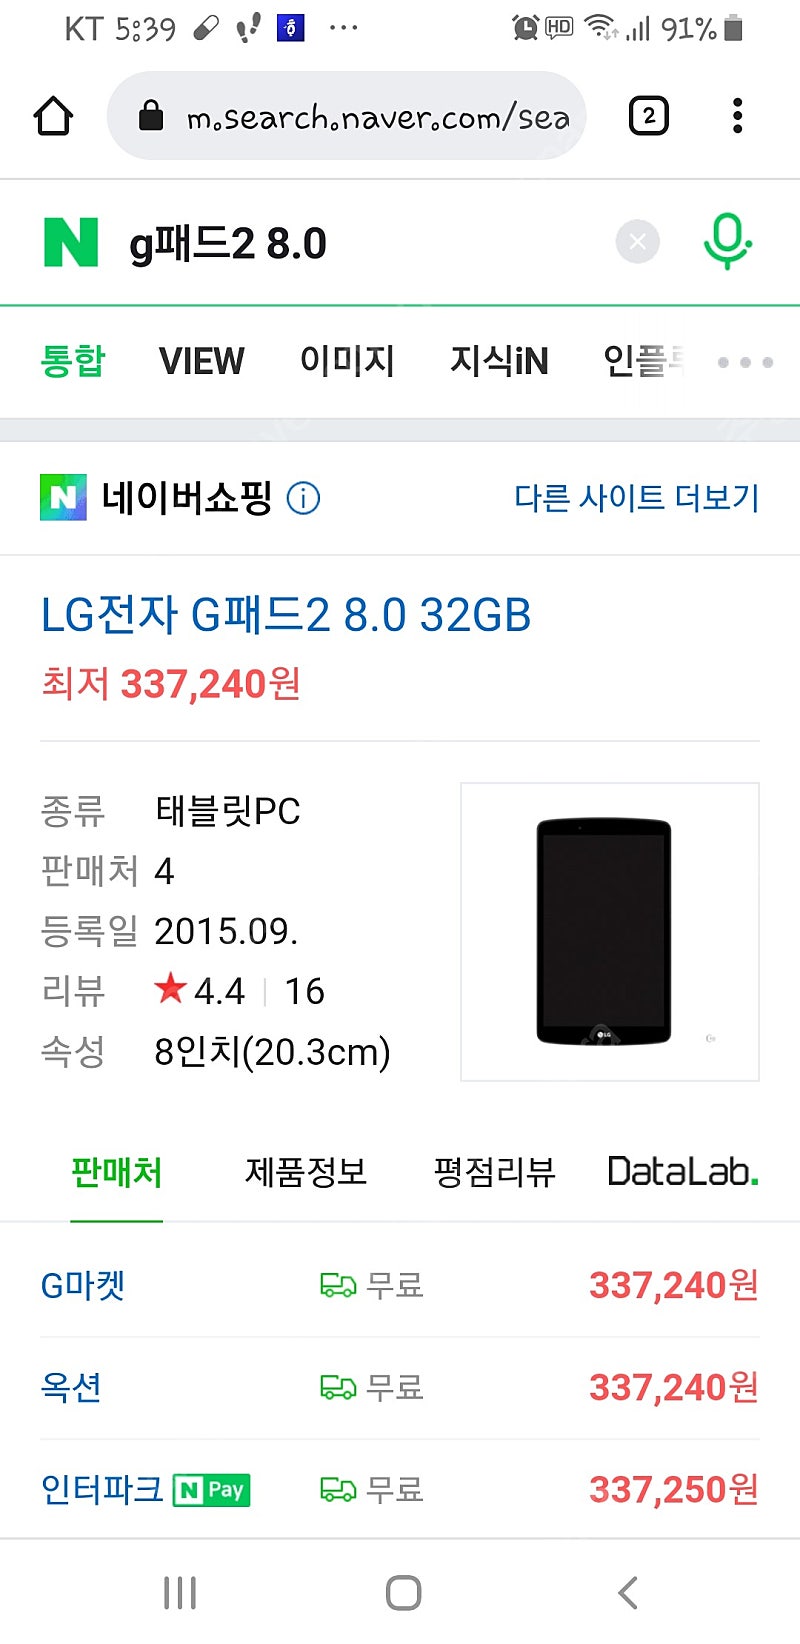 LG G패드 2 8.0 인강용태블릿 판매합니다.